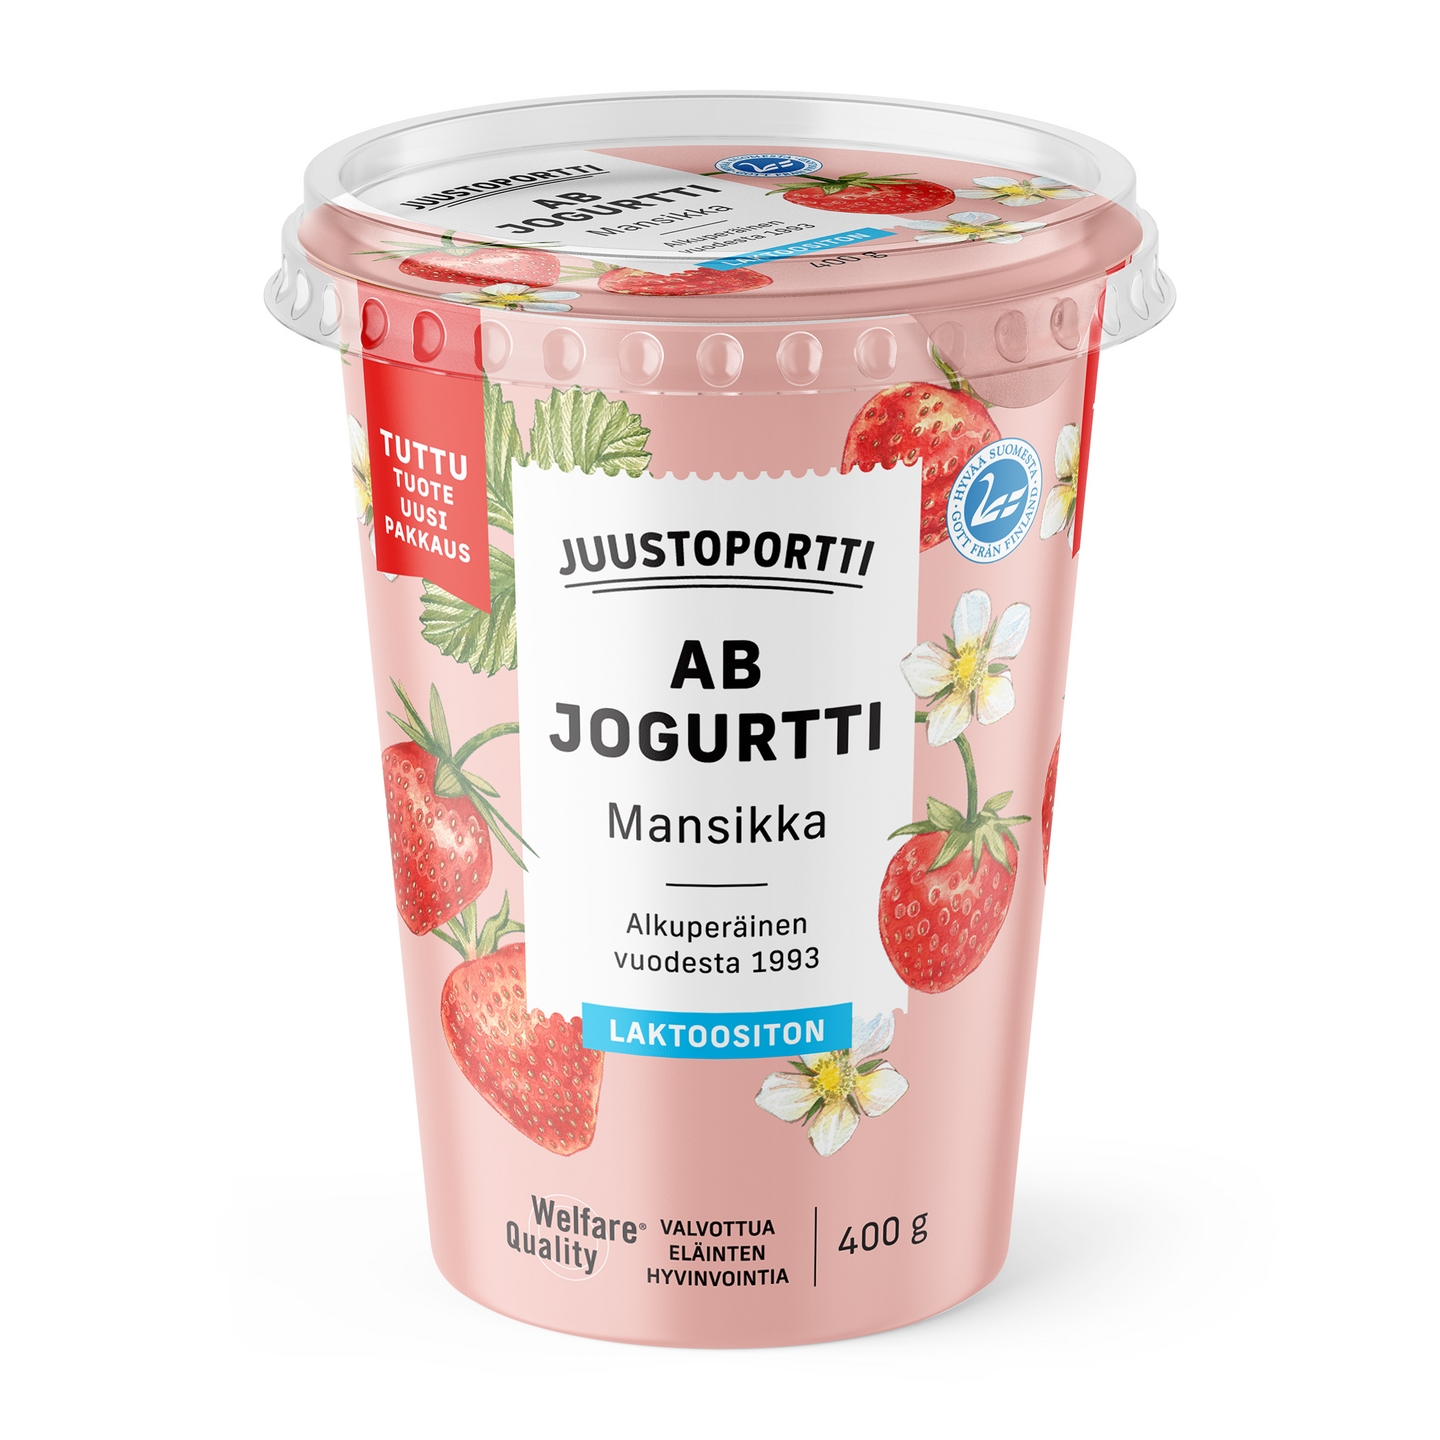 Juustoportti AB-jogurtti 400g mansika laktoositon